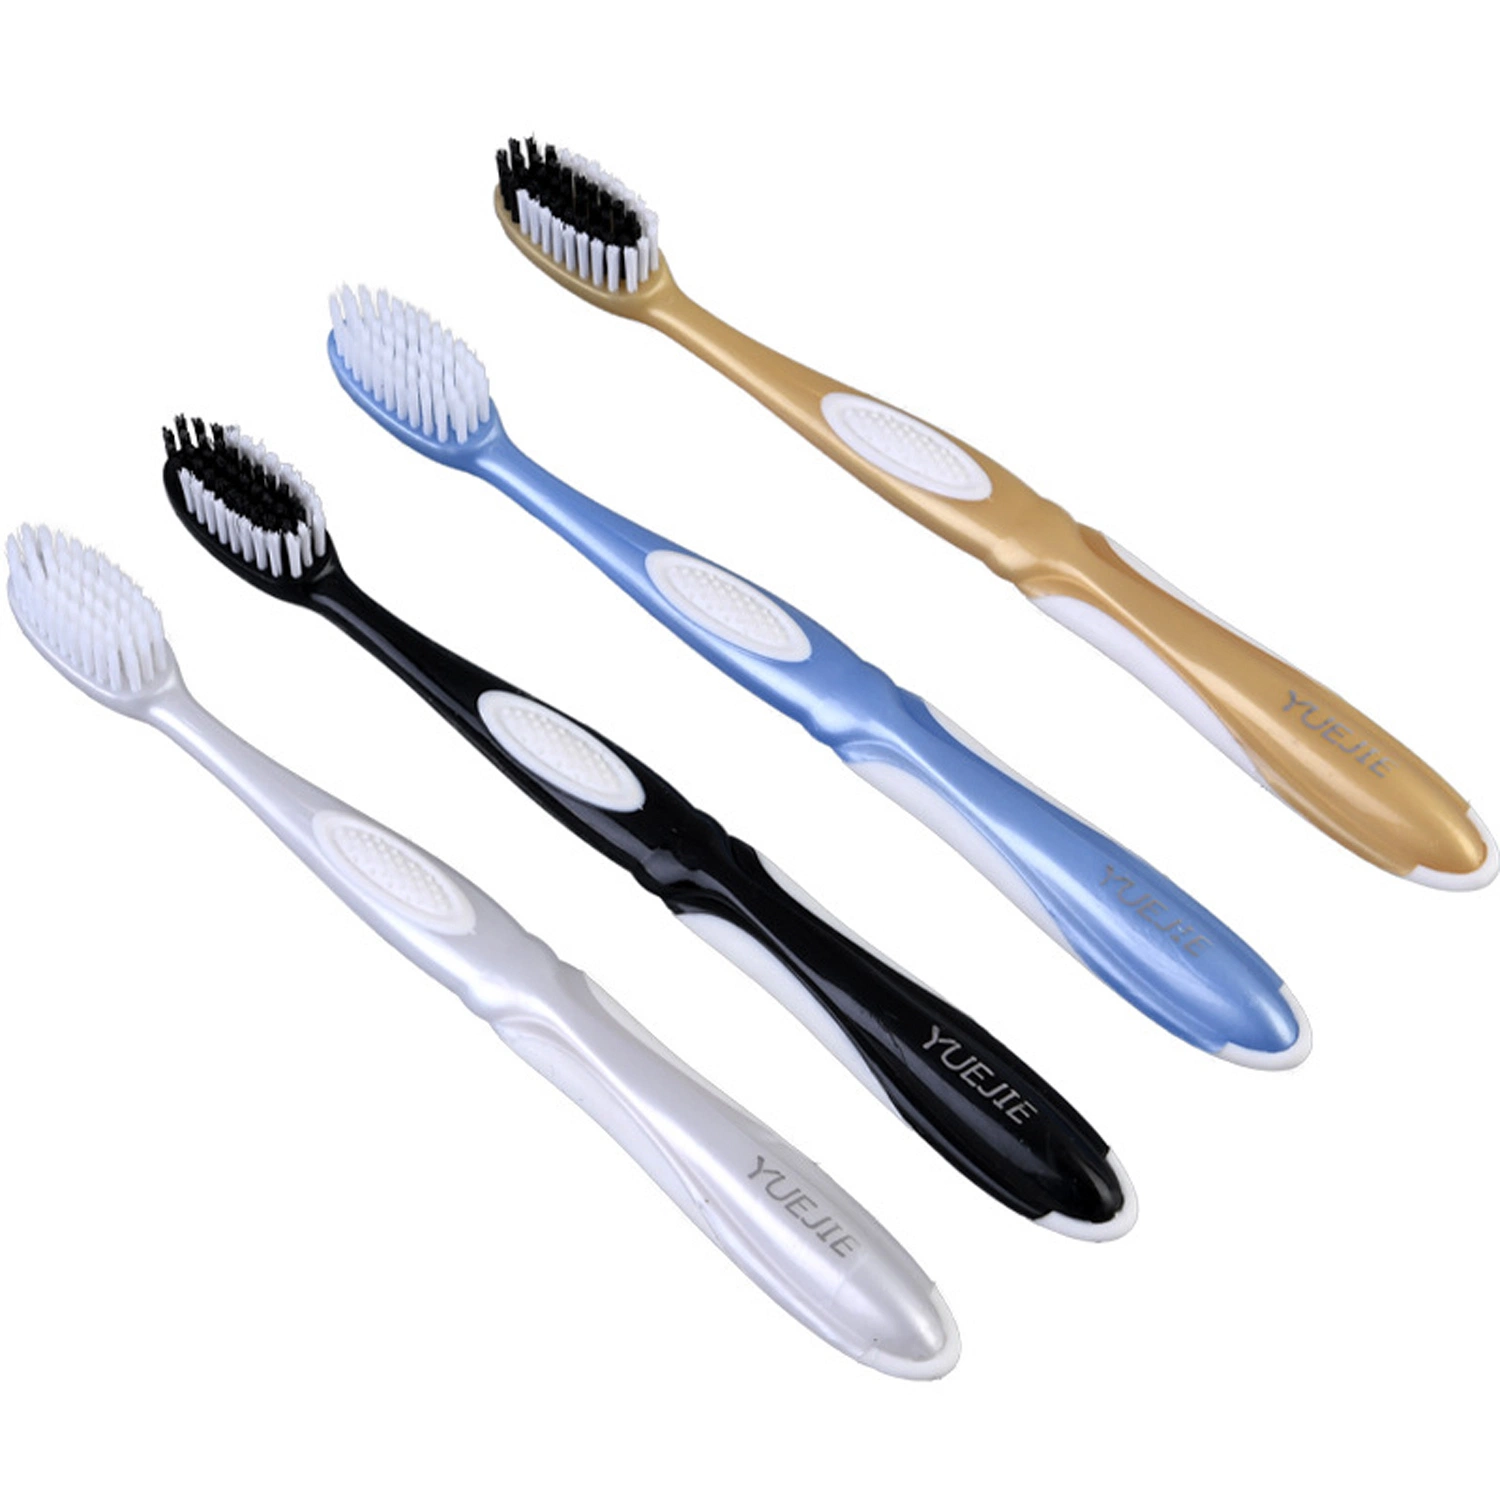 Hard Bristles Firm Hard Multicolor Denture Brush Large Head Manual Travel Toothbrush Adult Toothbrushes